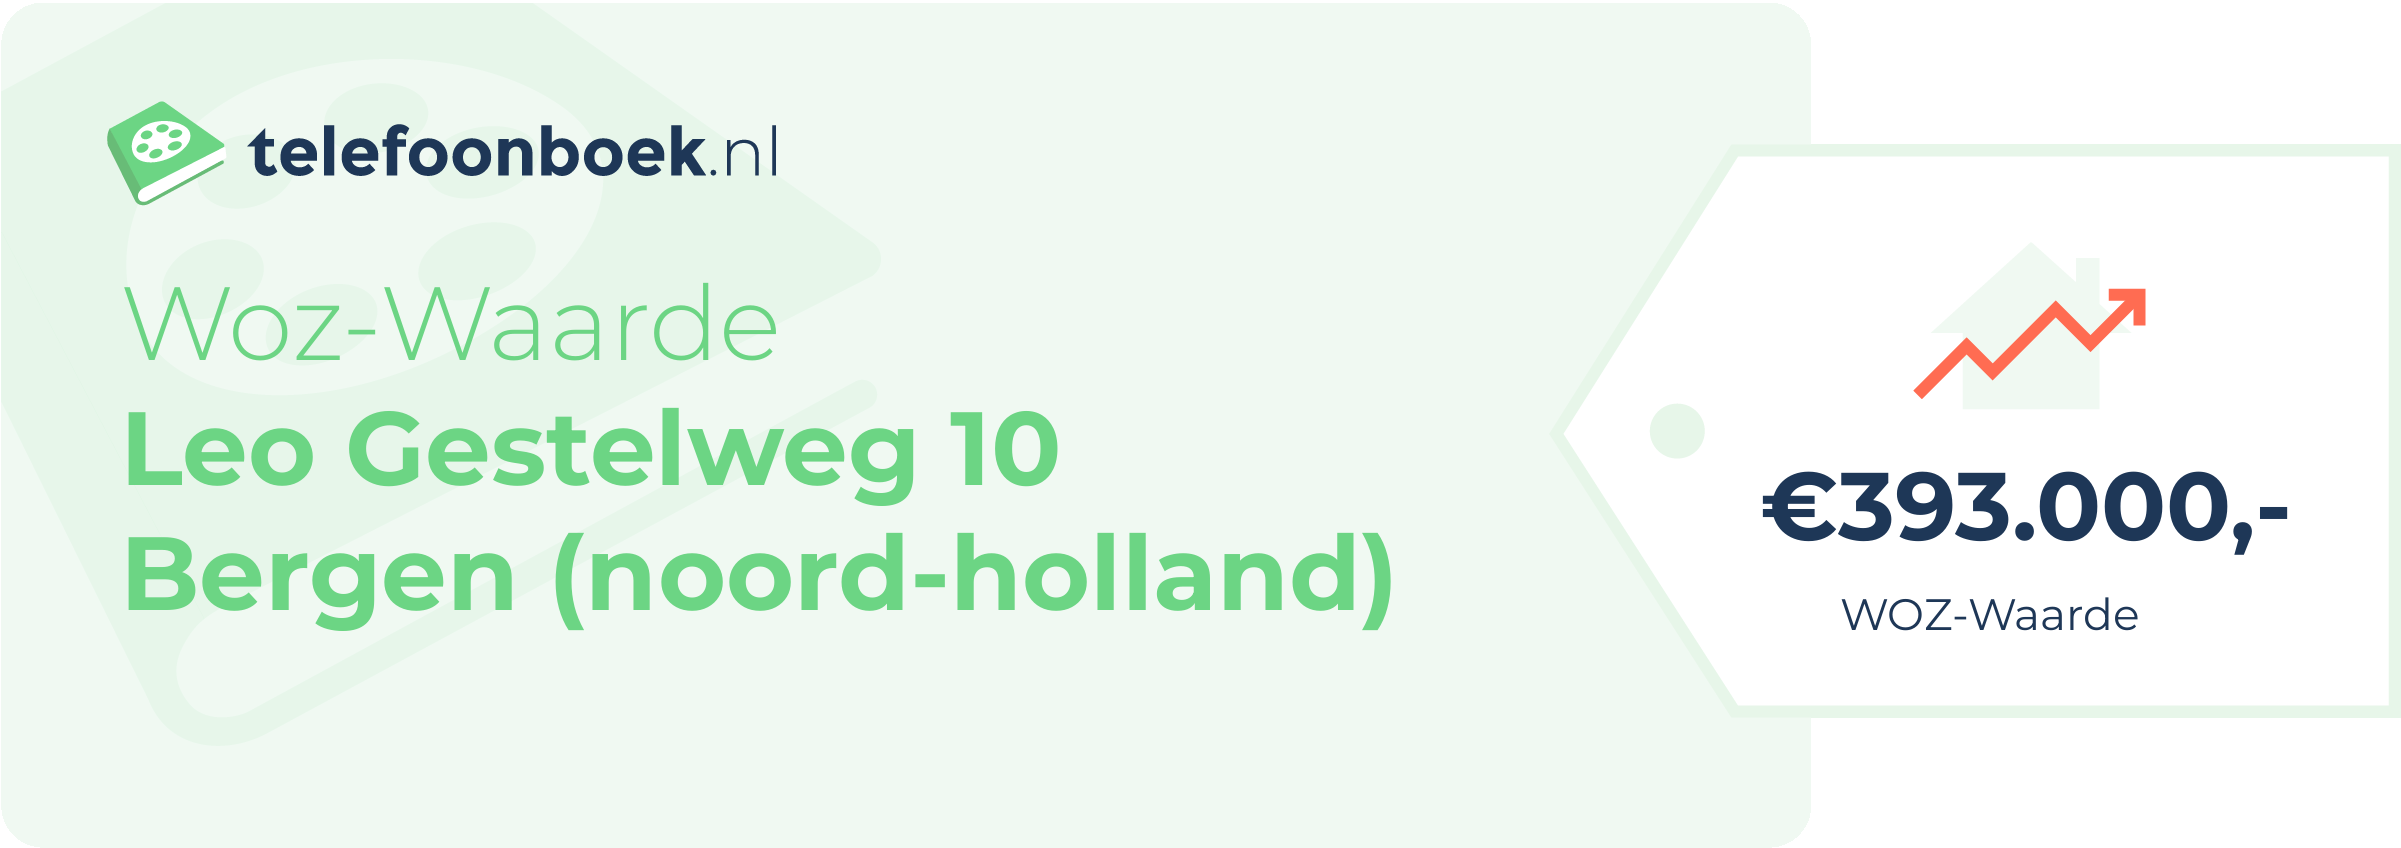 WOZ-waarde Leo Gestelweg 10 Bergen (Noord-Holland)